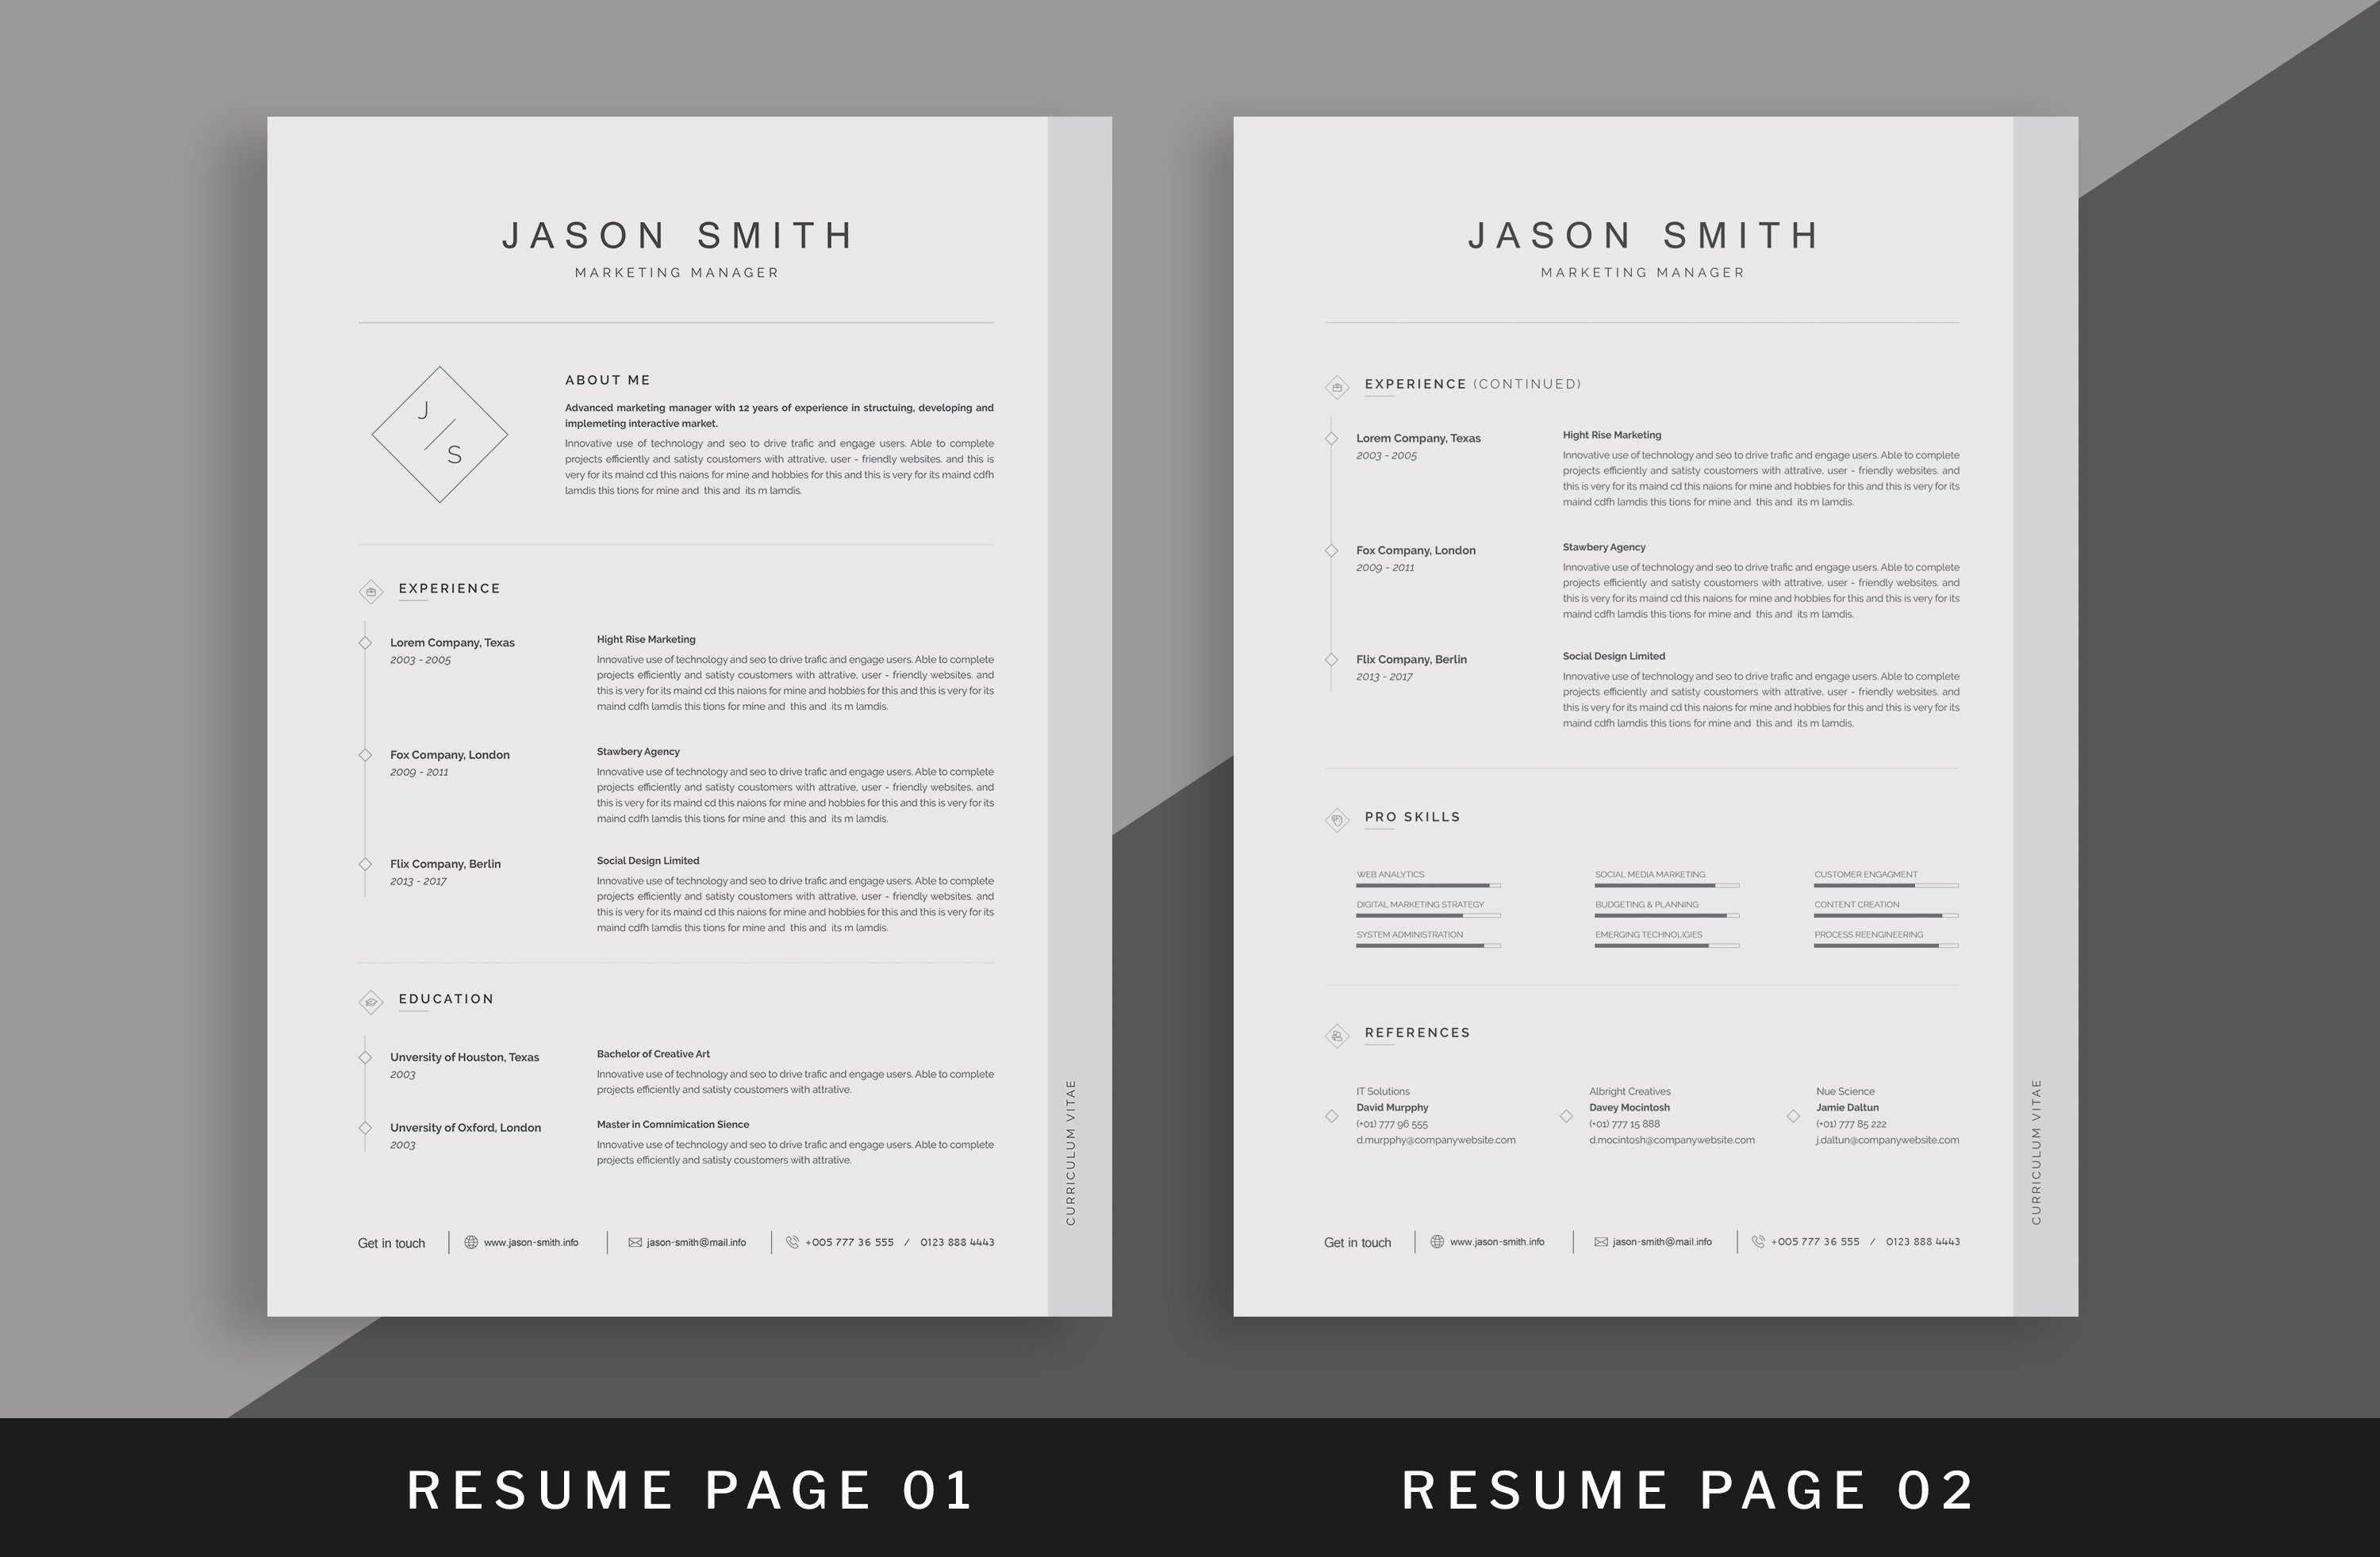 Cv-Resume preview image.